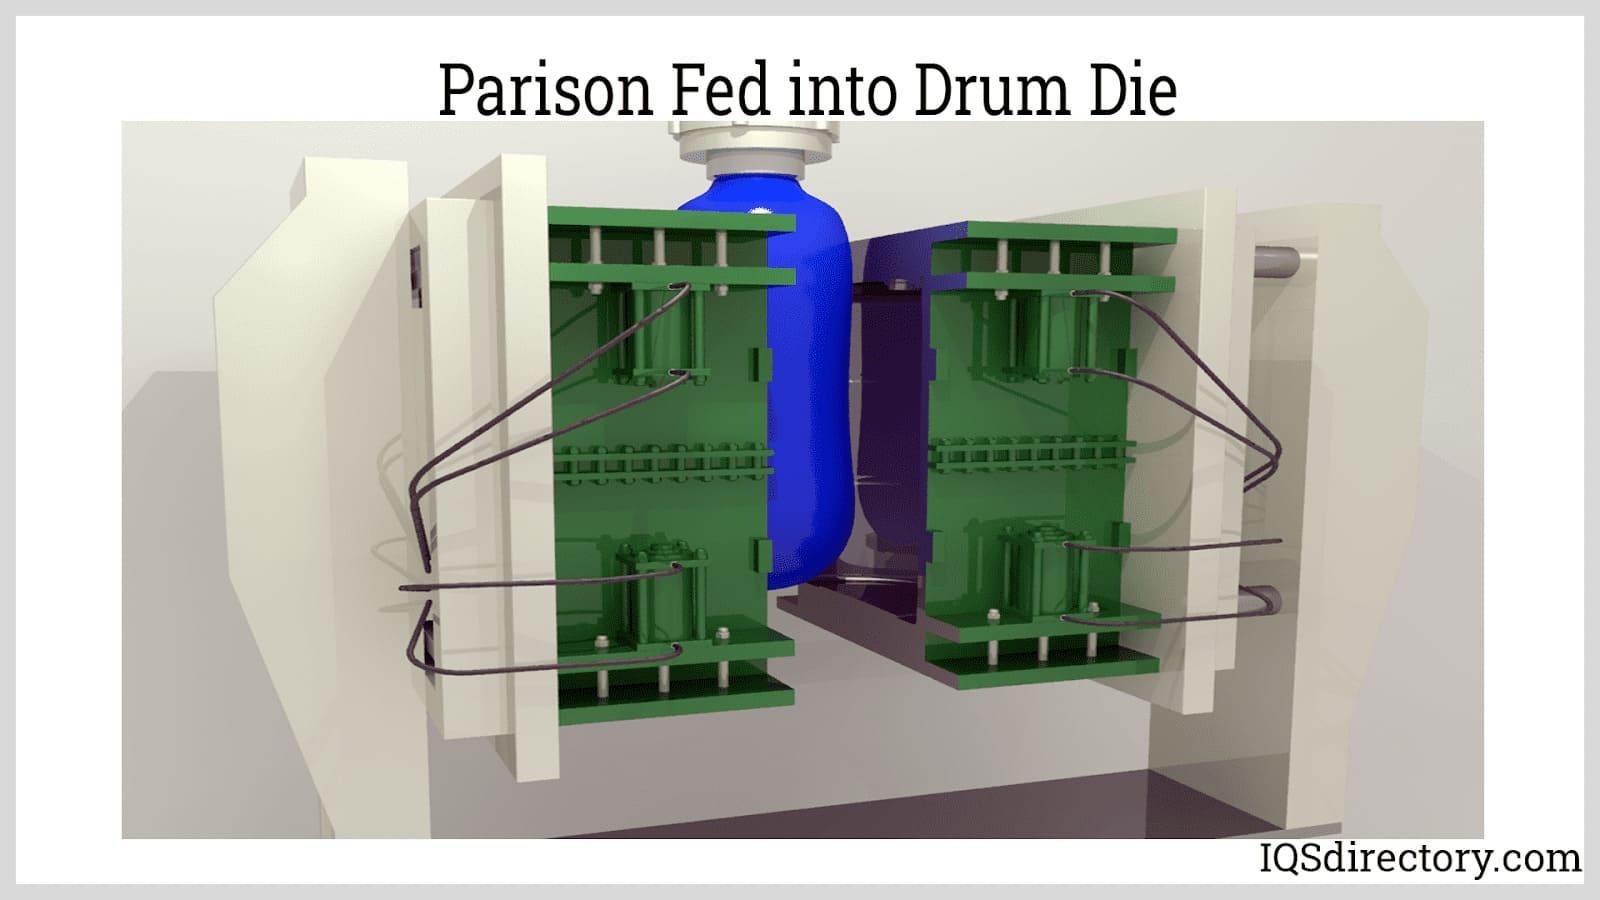 Parison Fed into Drum Die